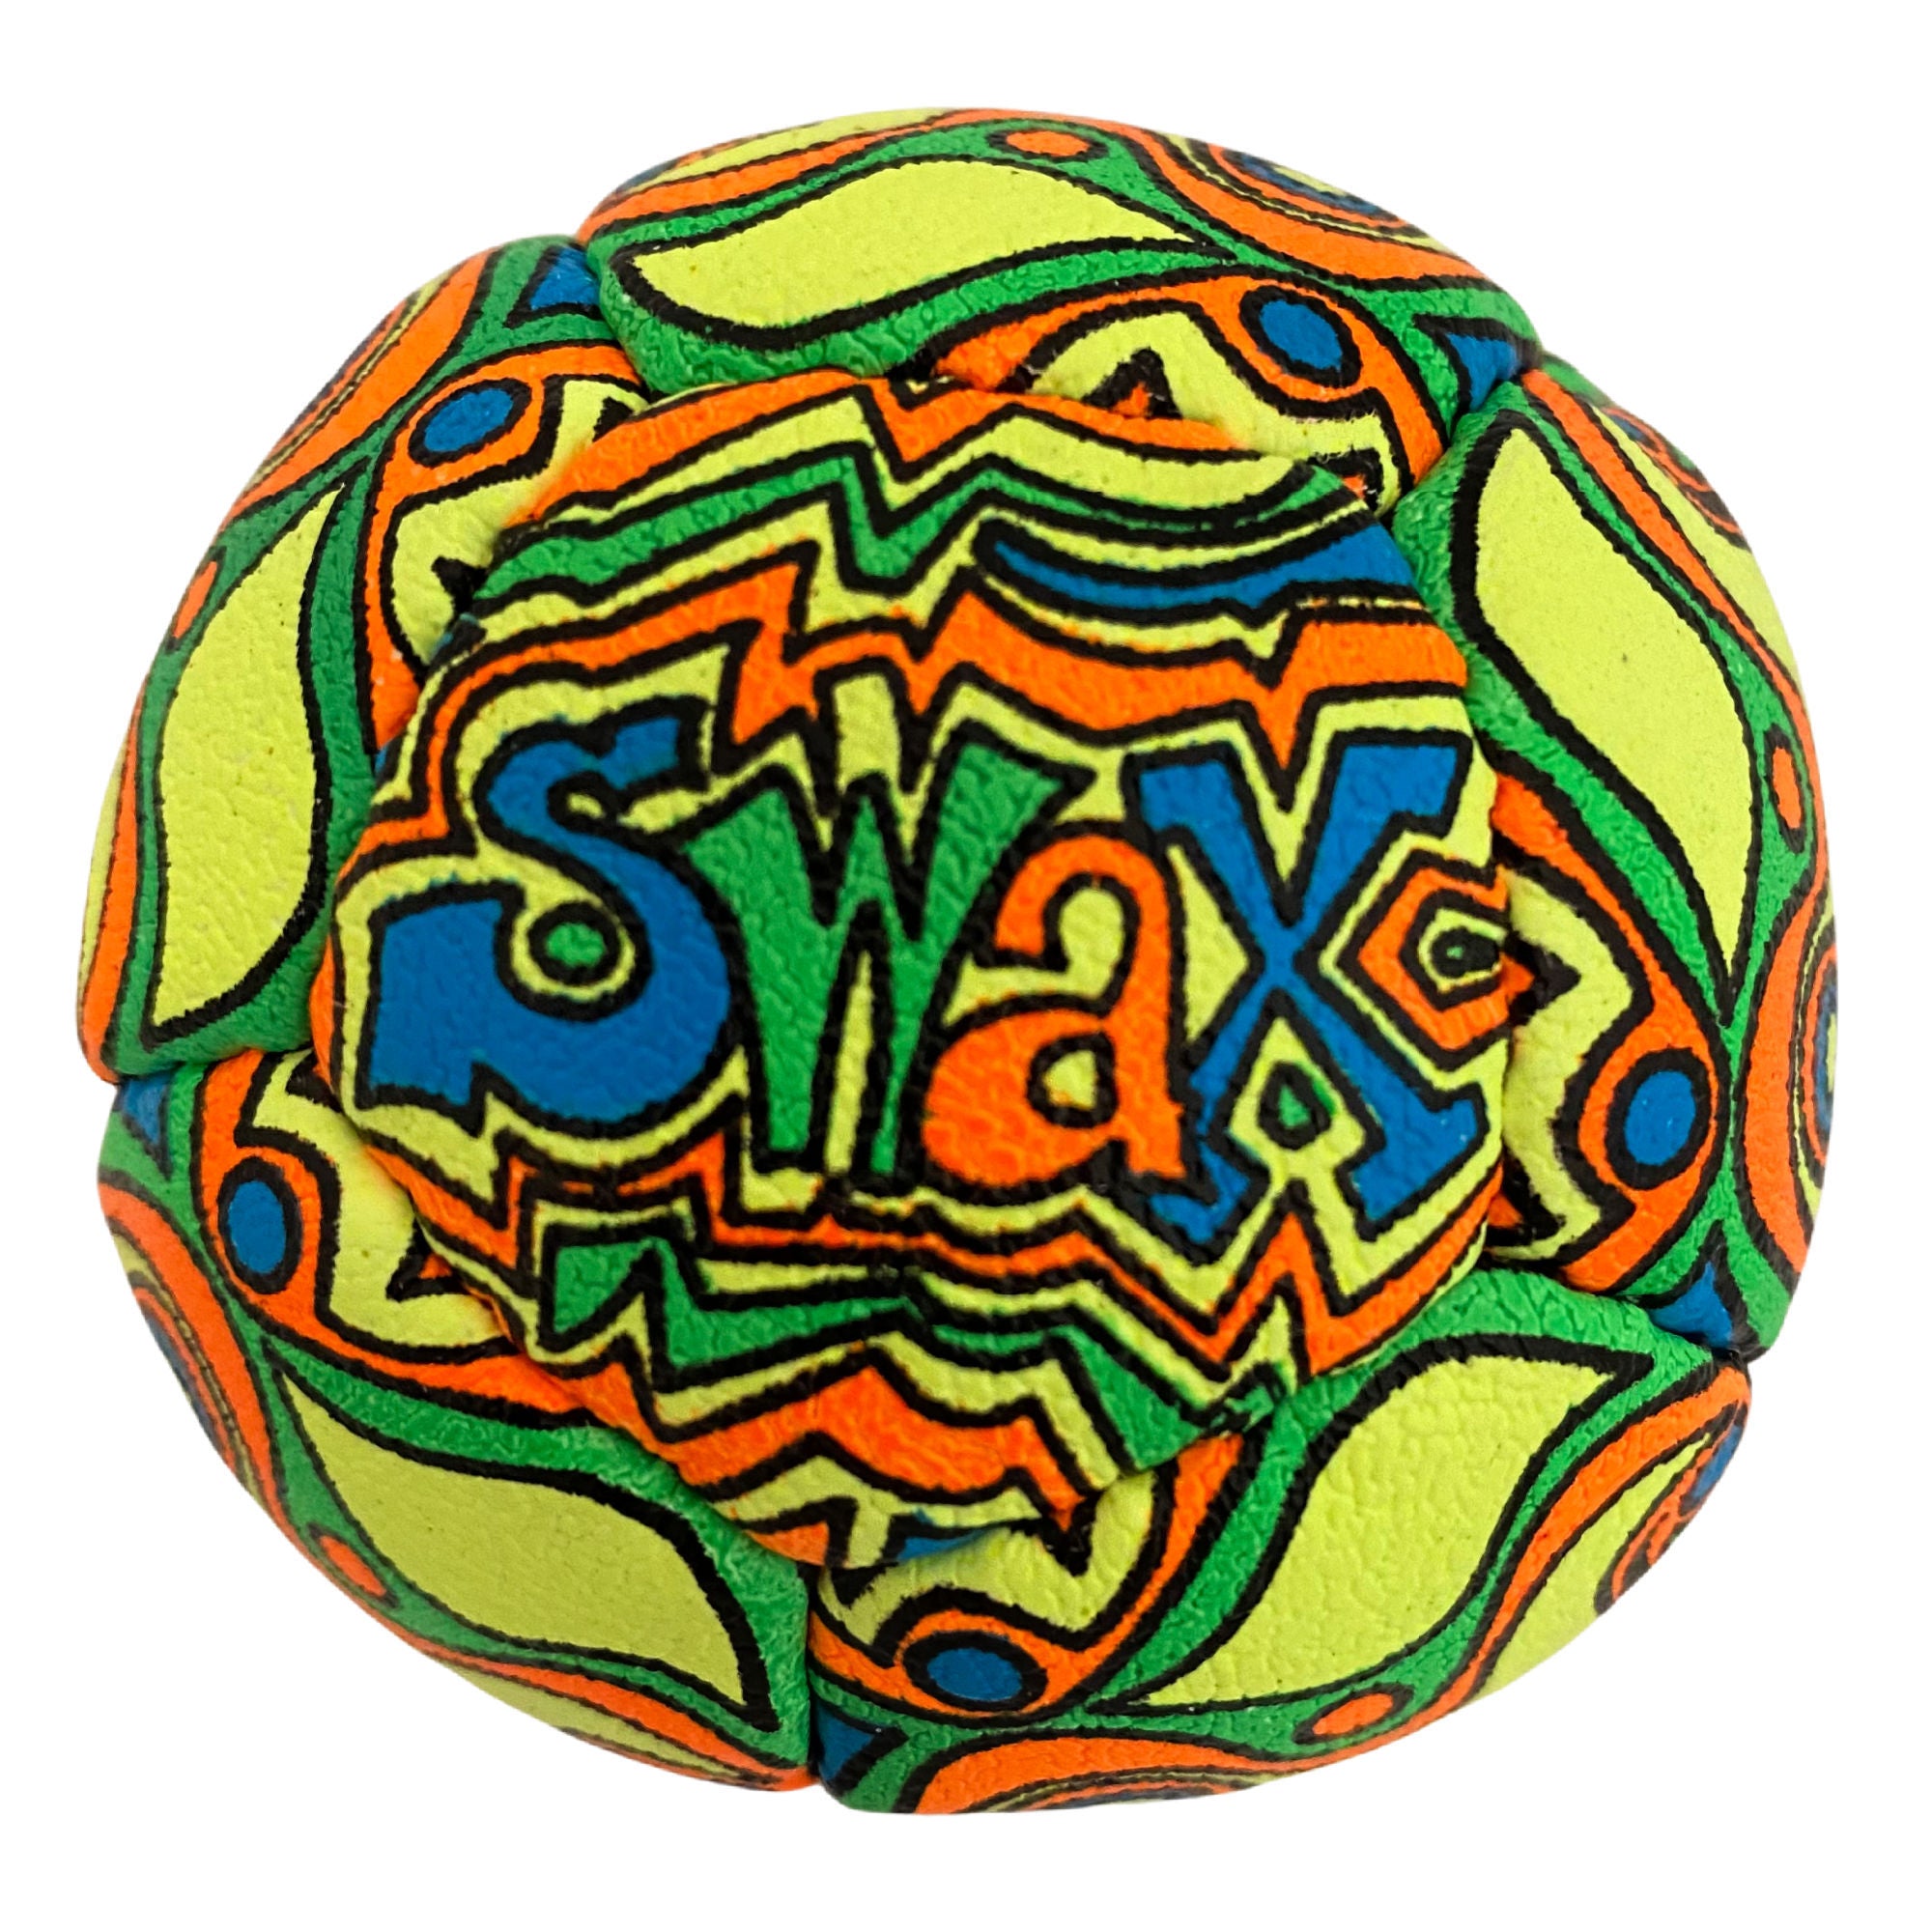 Swax Lax Graffiti lacrosse training ball - back view